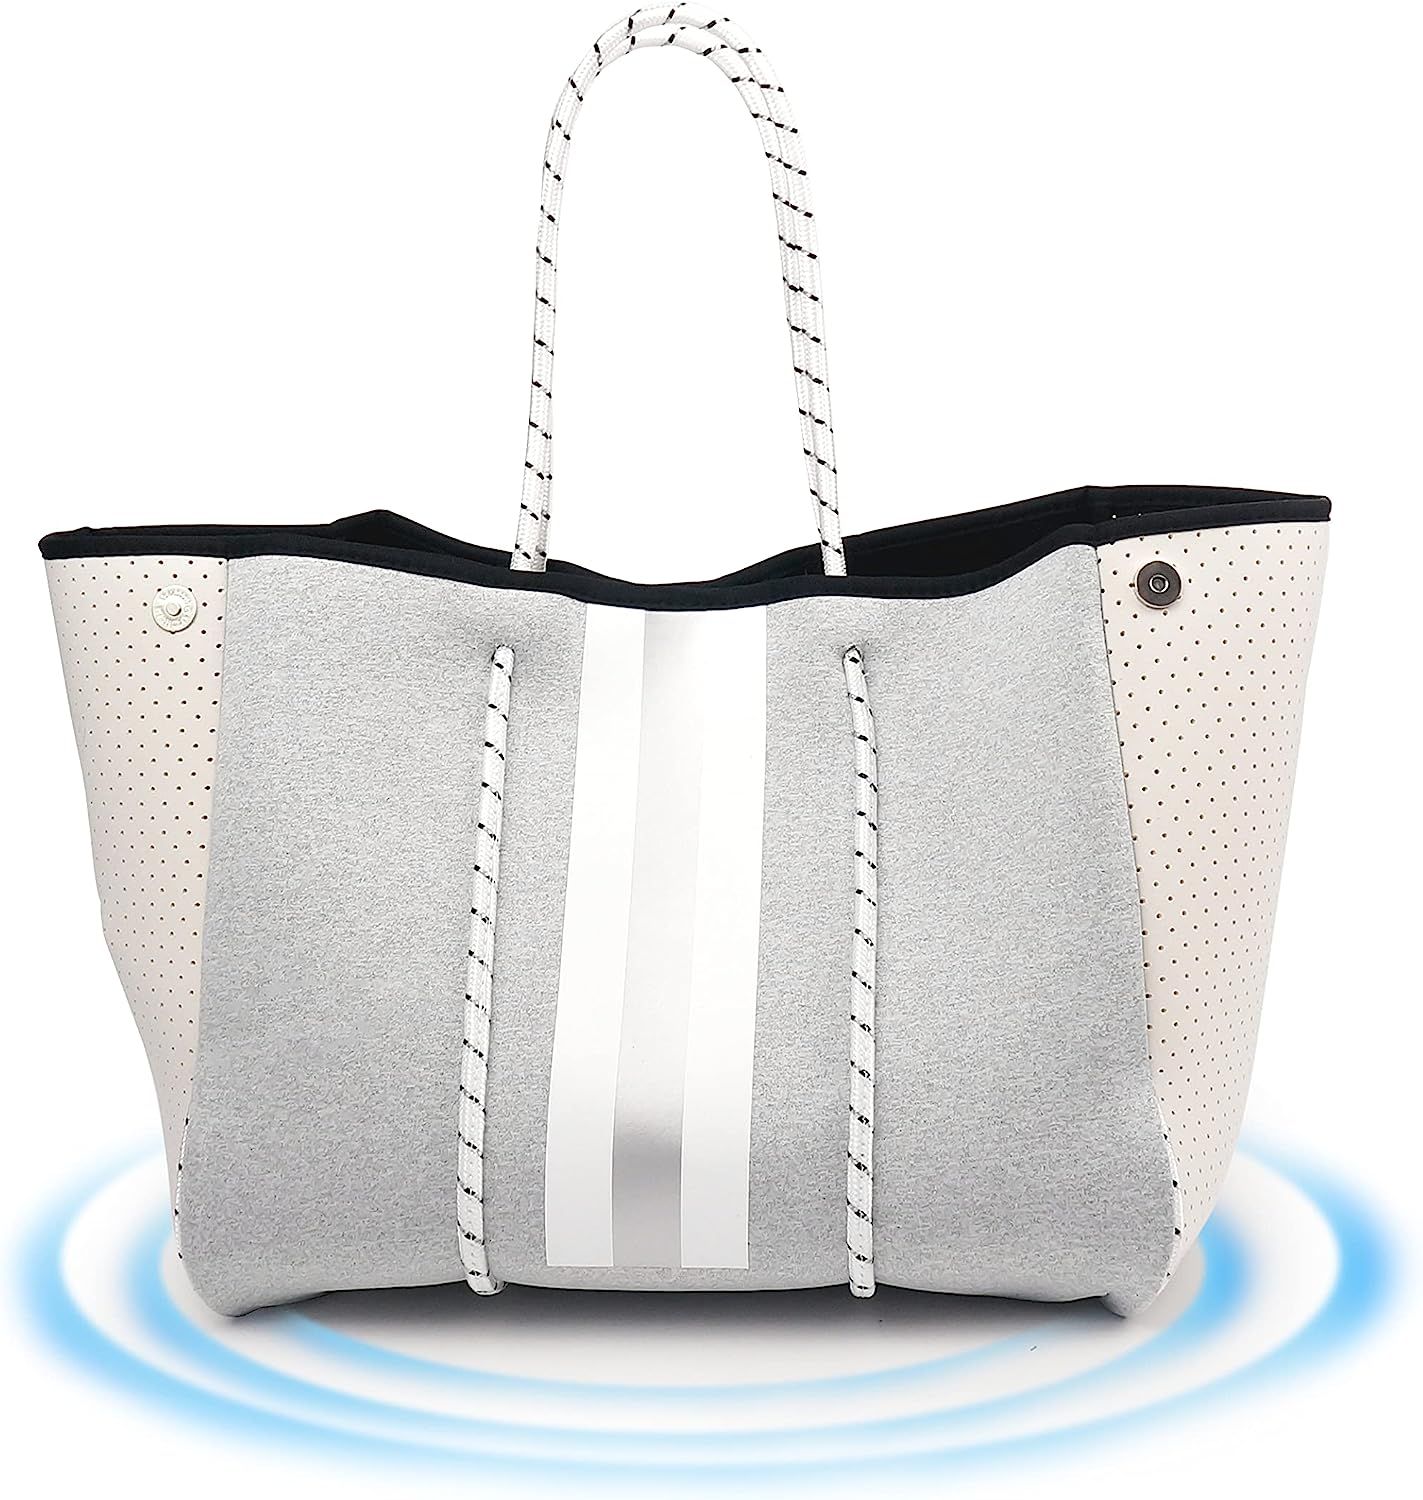 Tote Bag for Women,Neoprene Bag,Handbags for Women by IBEE | Amazon (US)